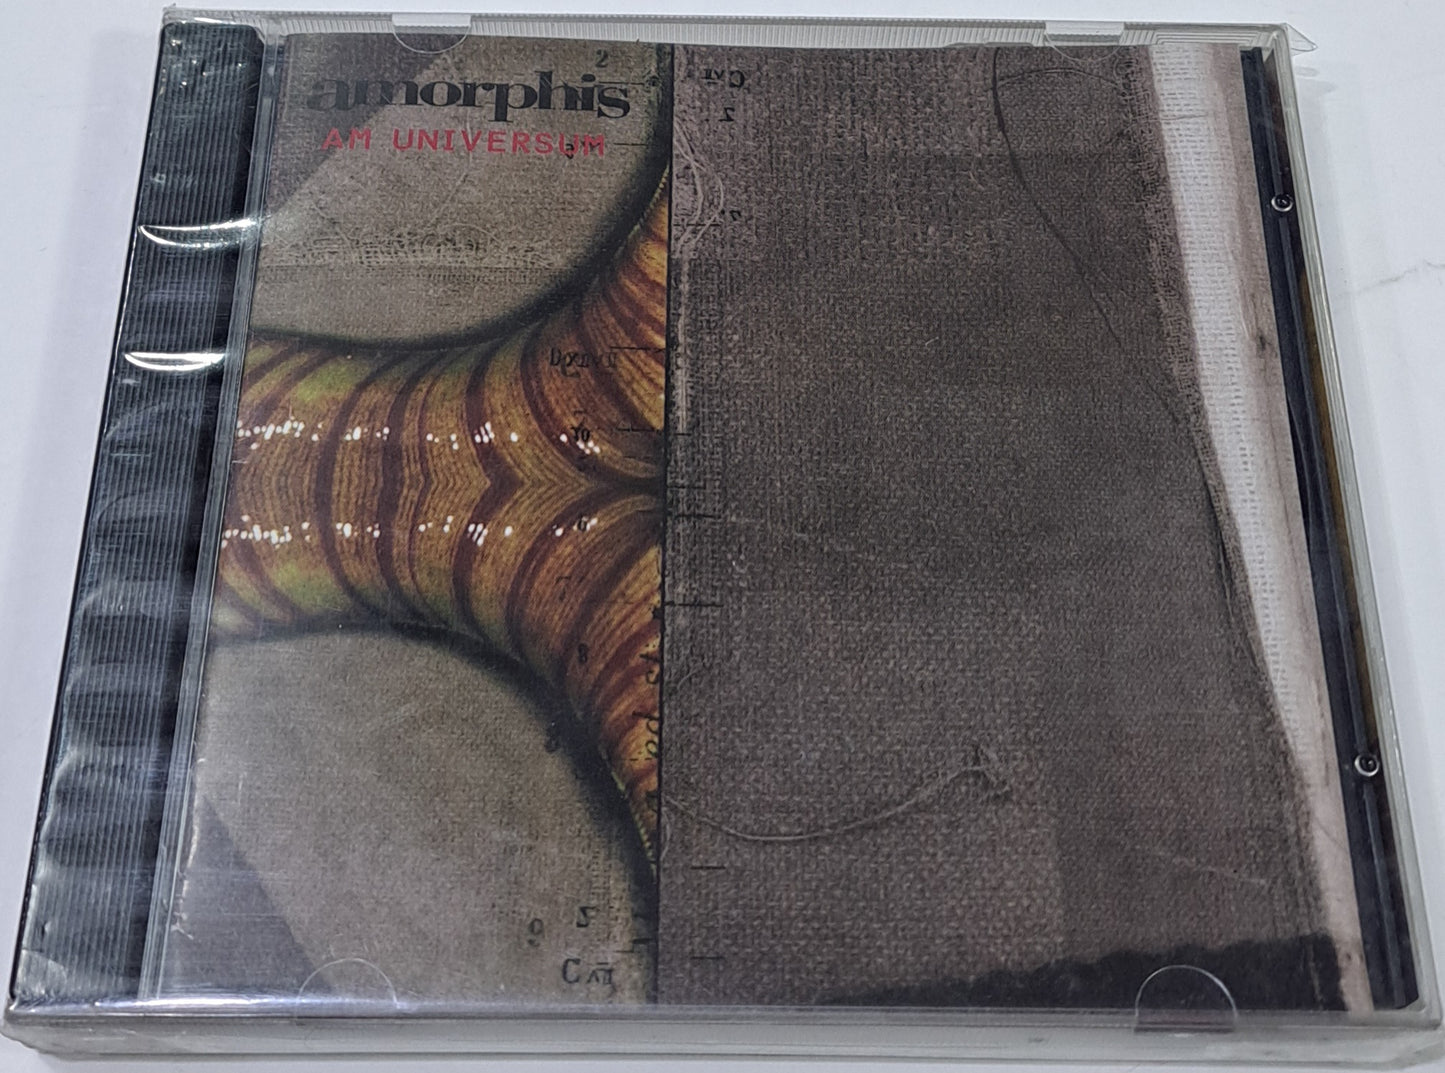 AMORPHIS - AM UNIVERSUM  CD